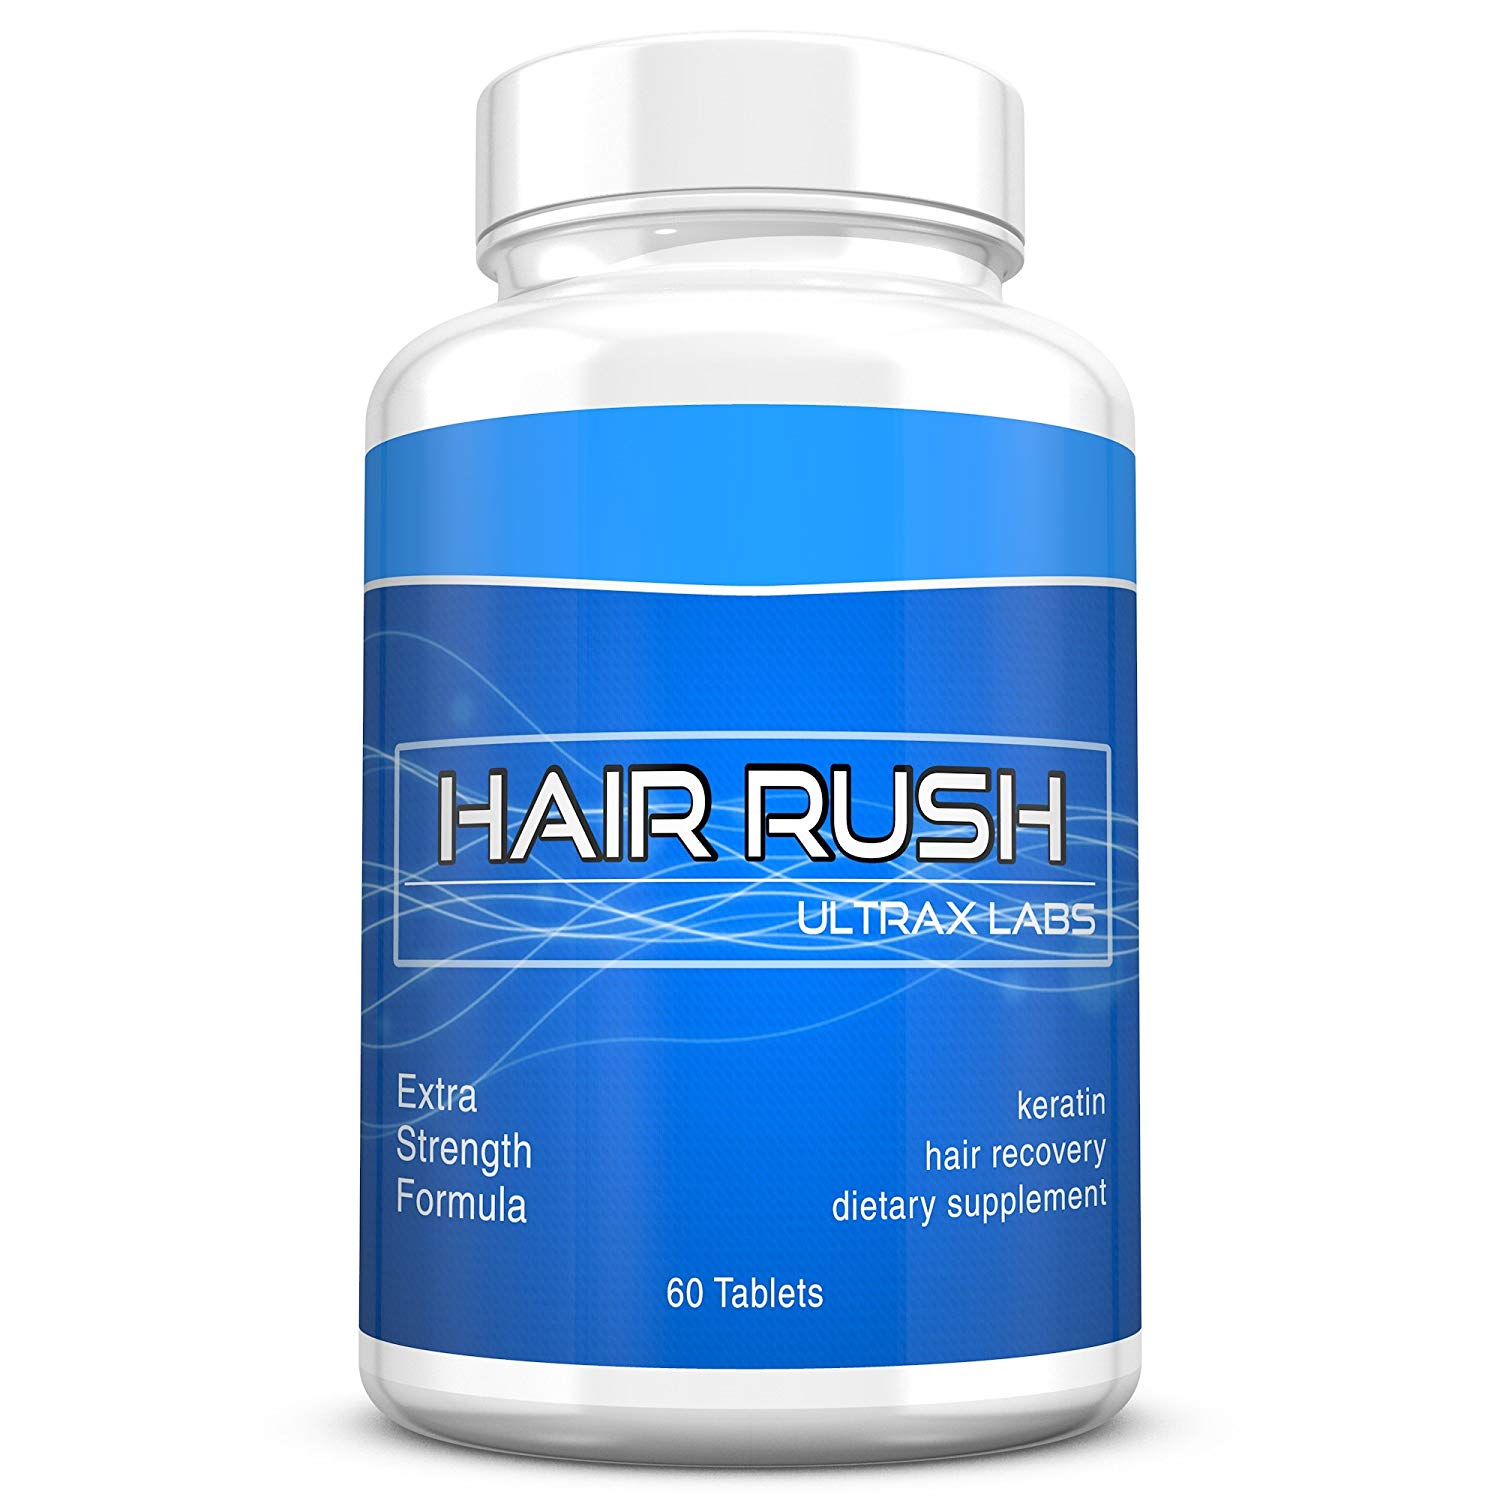 Ultrax Labs Hair Rush hair loss supplement